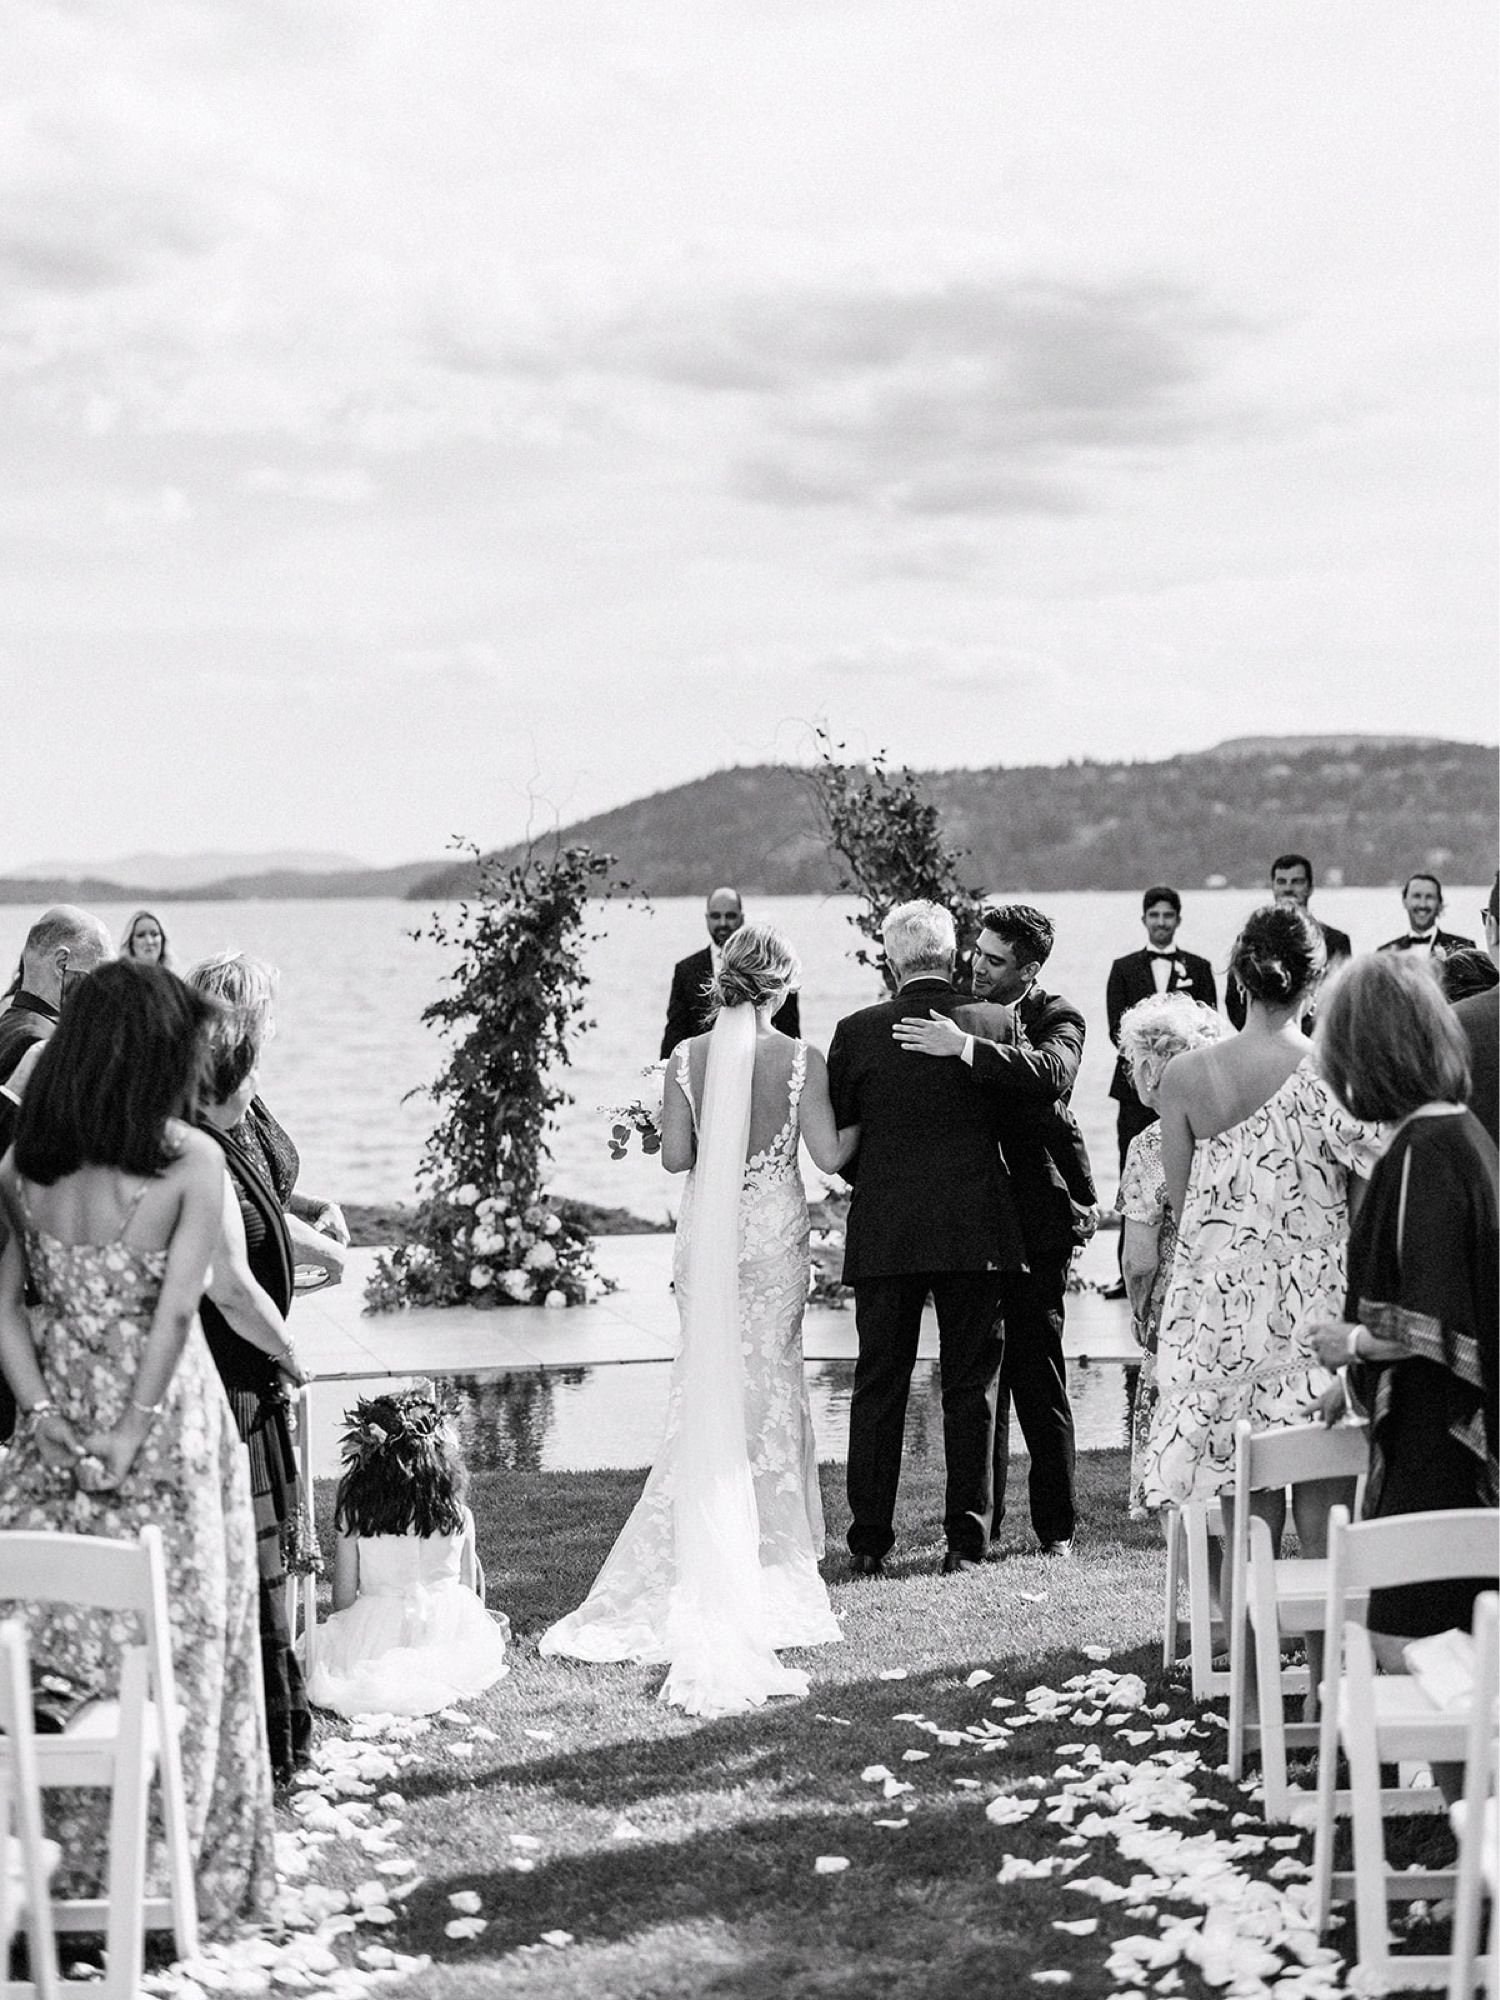 170_Candid and emotional wedding at the Coeur d’Alene resort by top Idaho wedding photographer Ryan Flynn.jpg